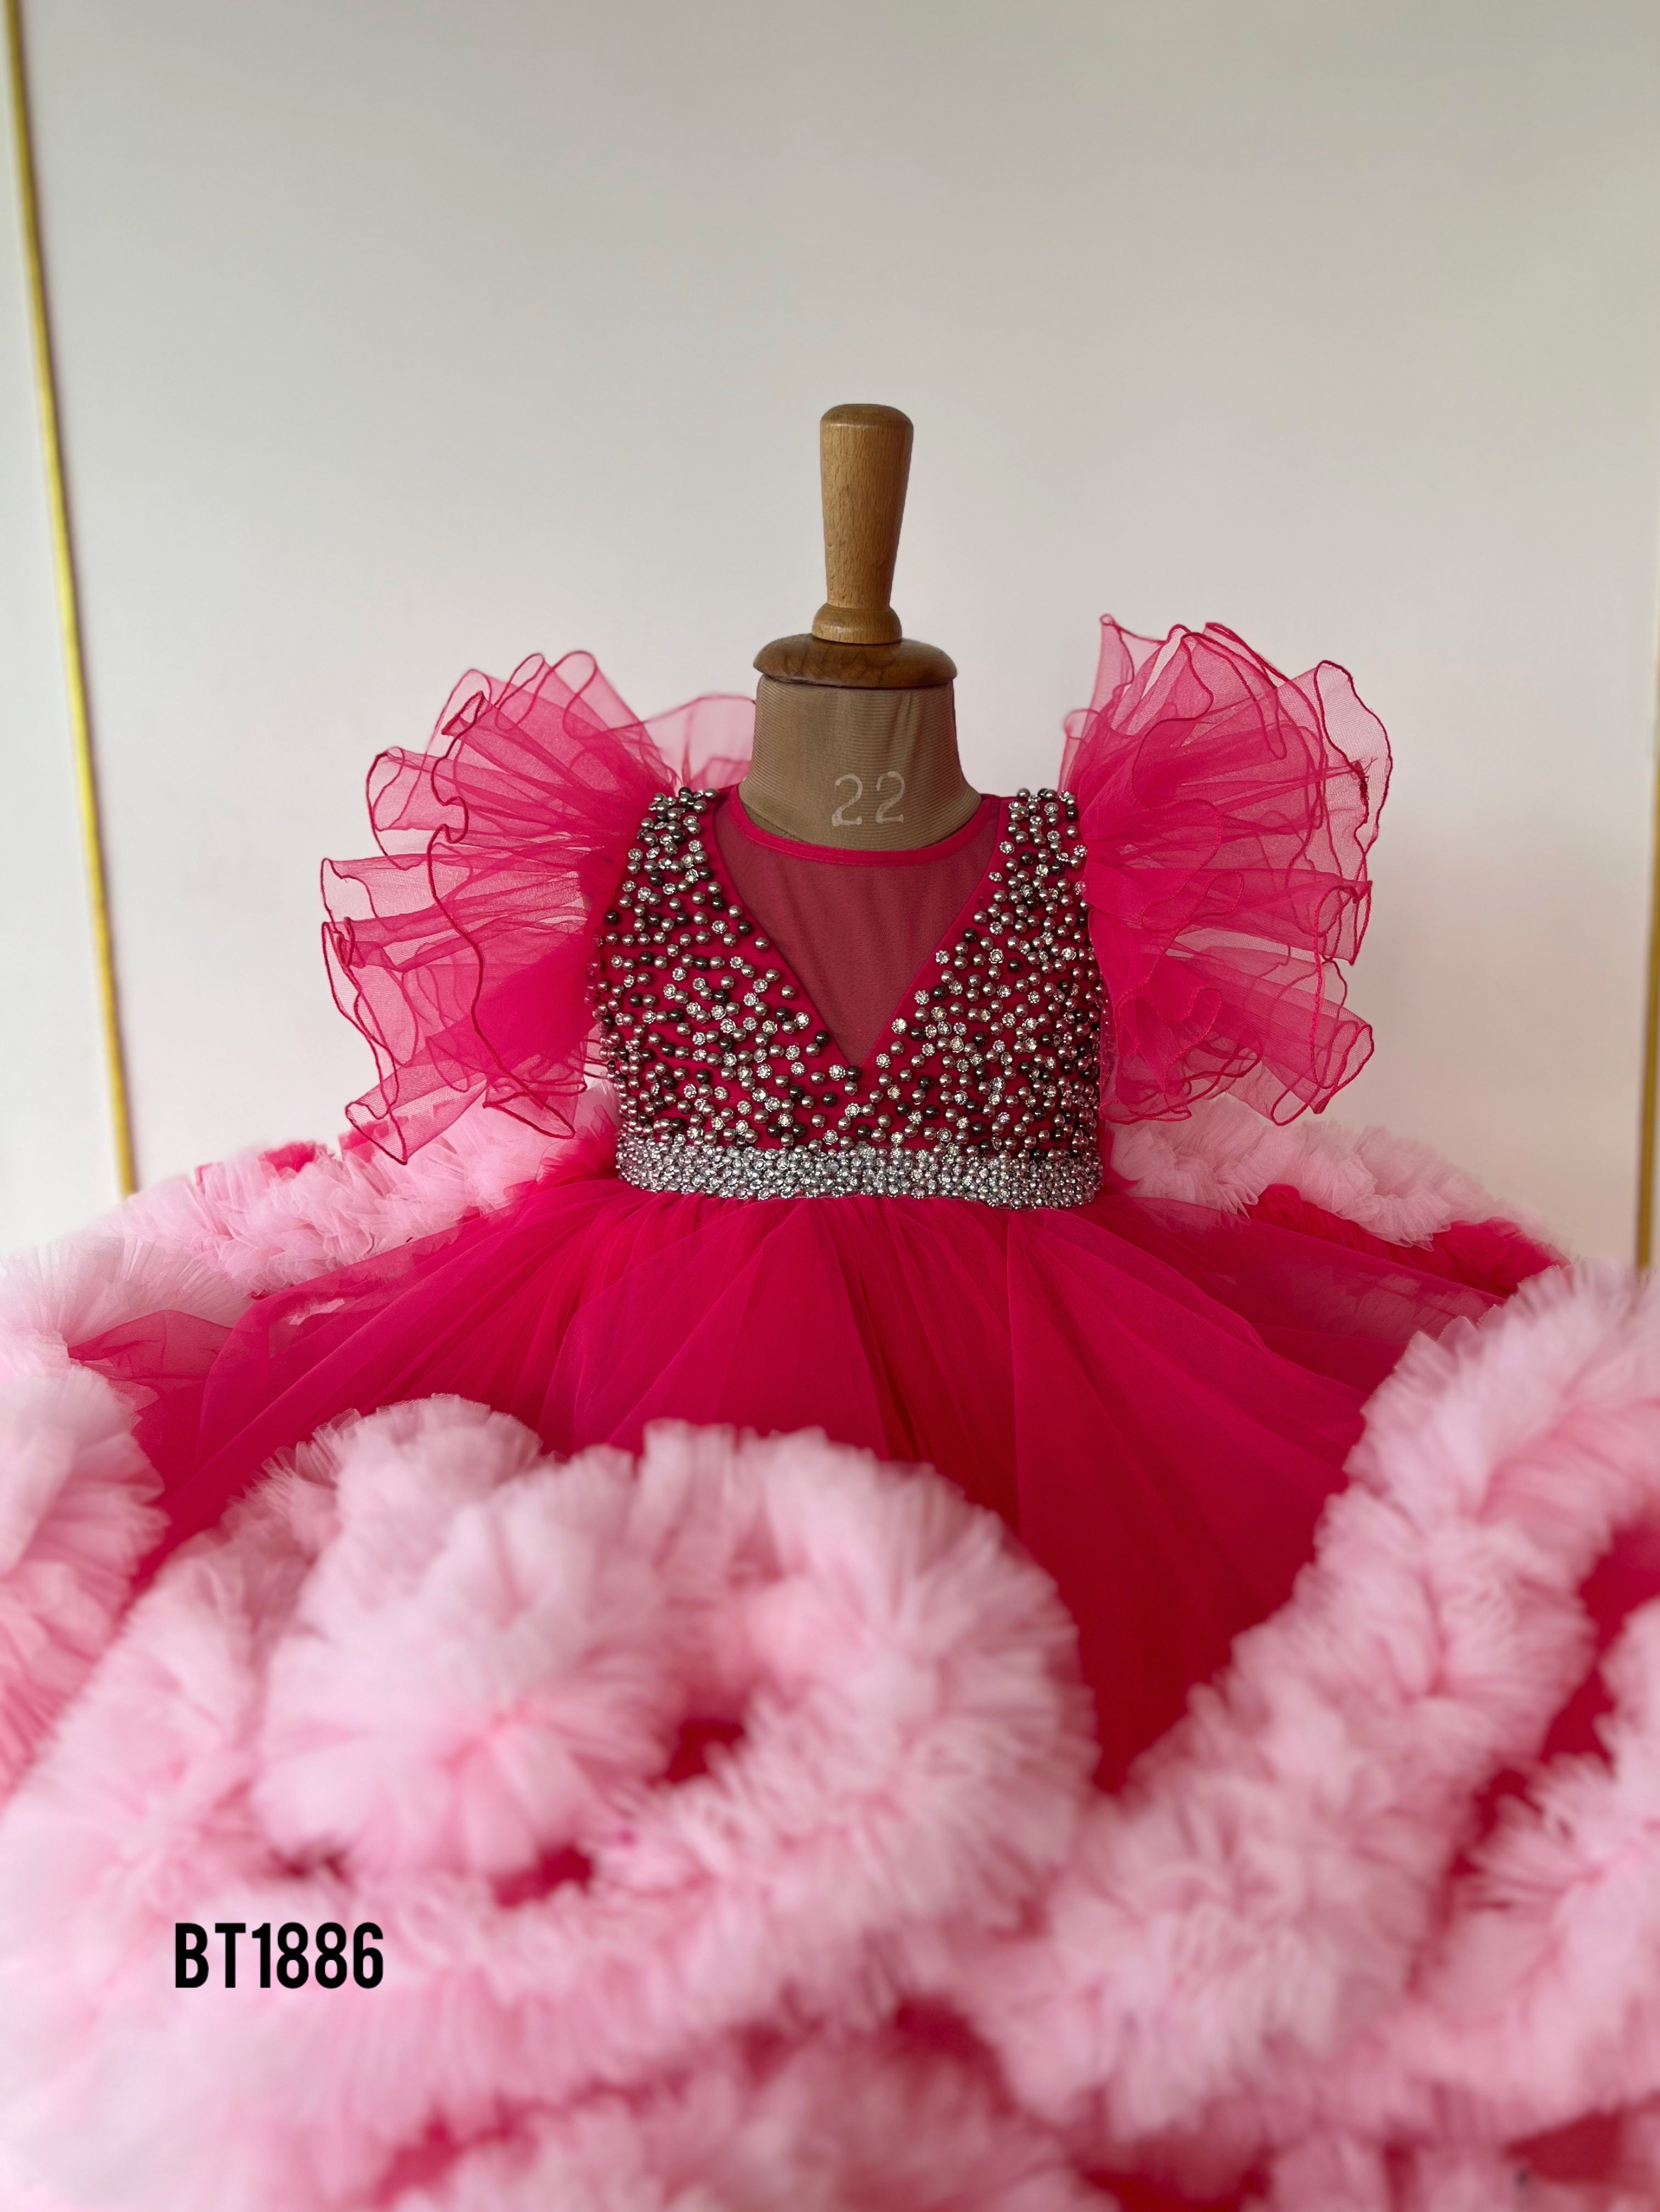 BT1886 Ruby Sparkle Princess Gown